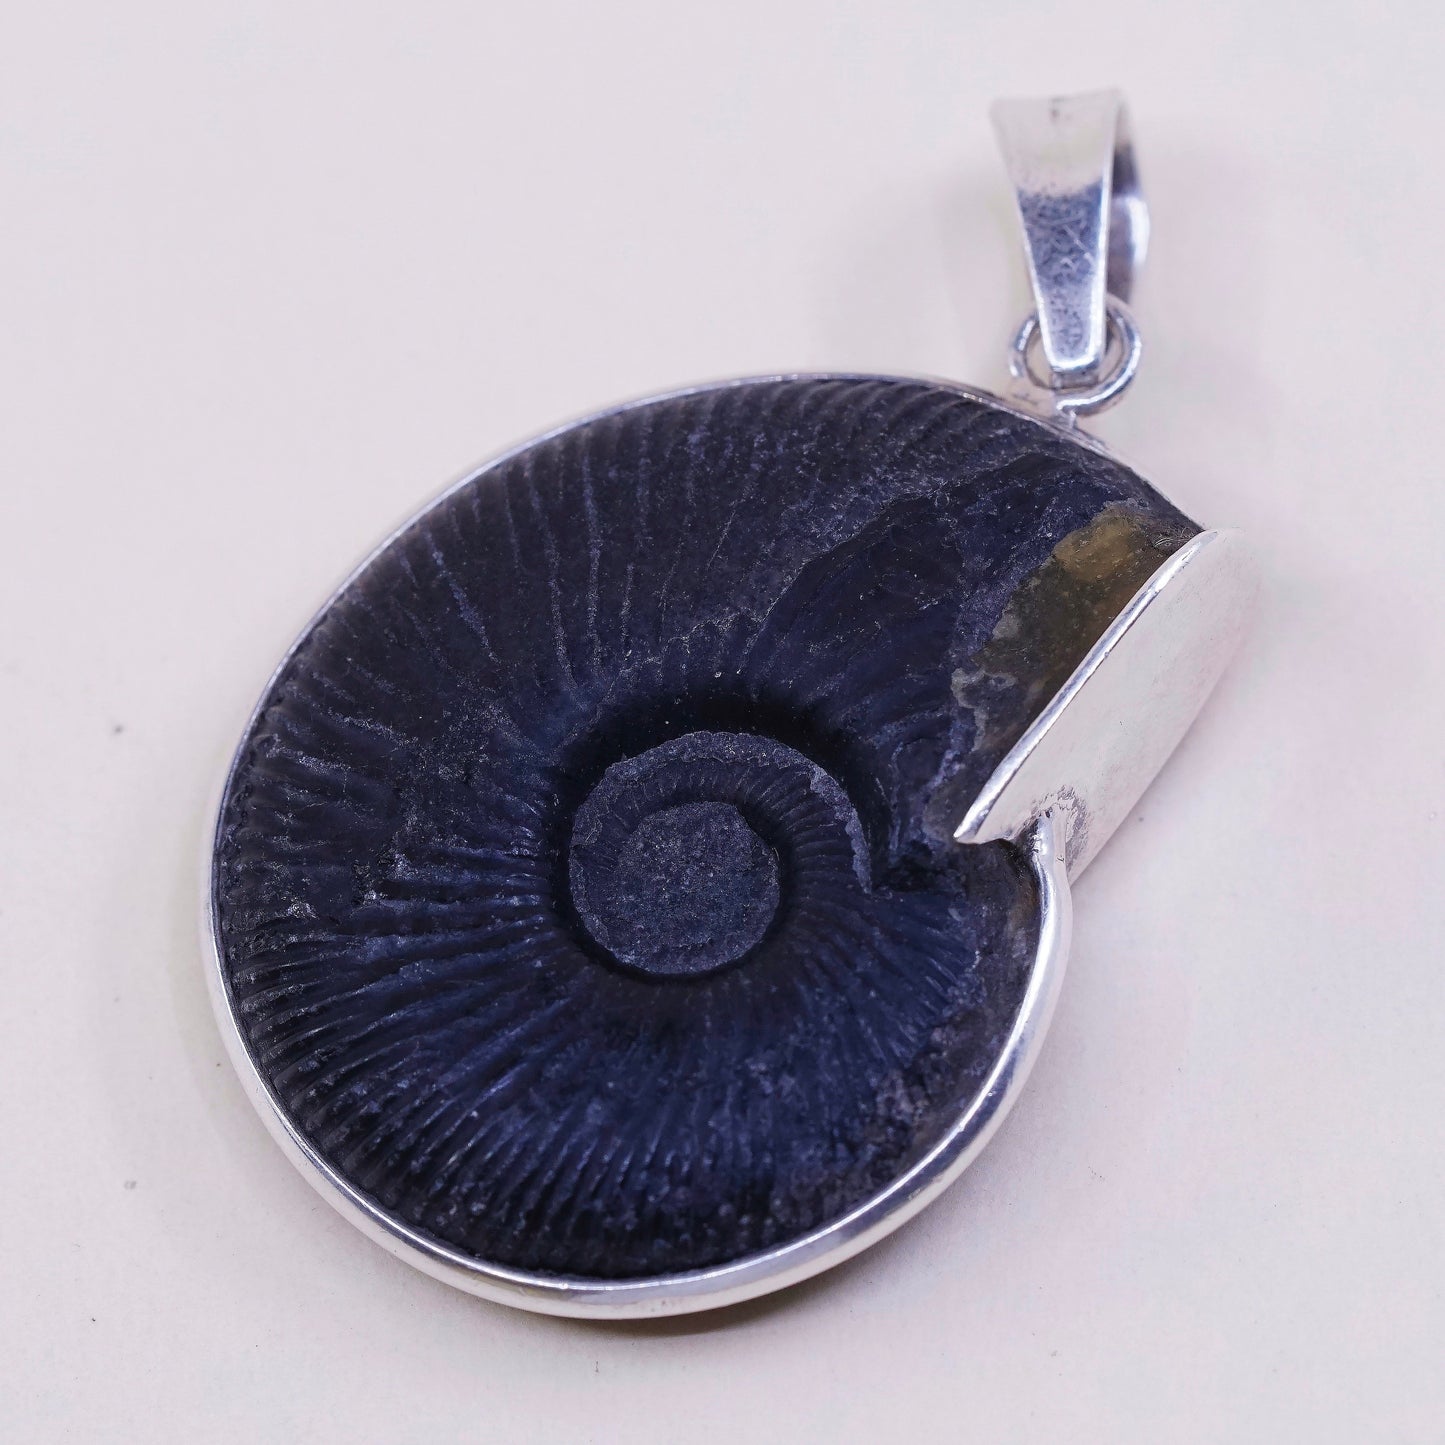 VTG Mexico Sterling silver handmade pendant, 925 frame w/ brass fossil shell